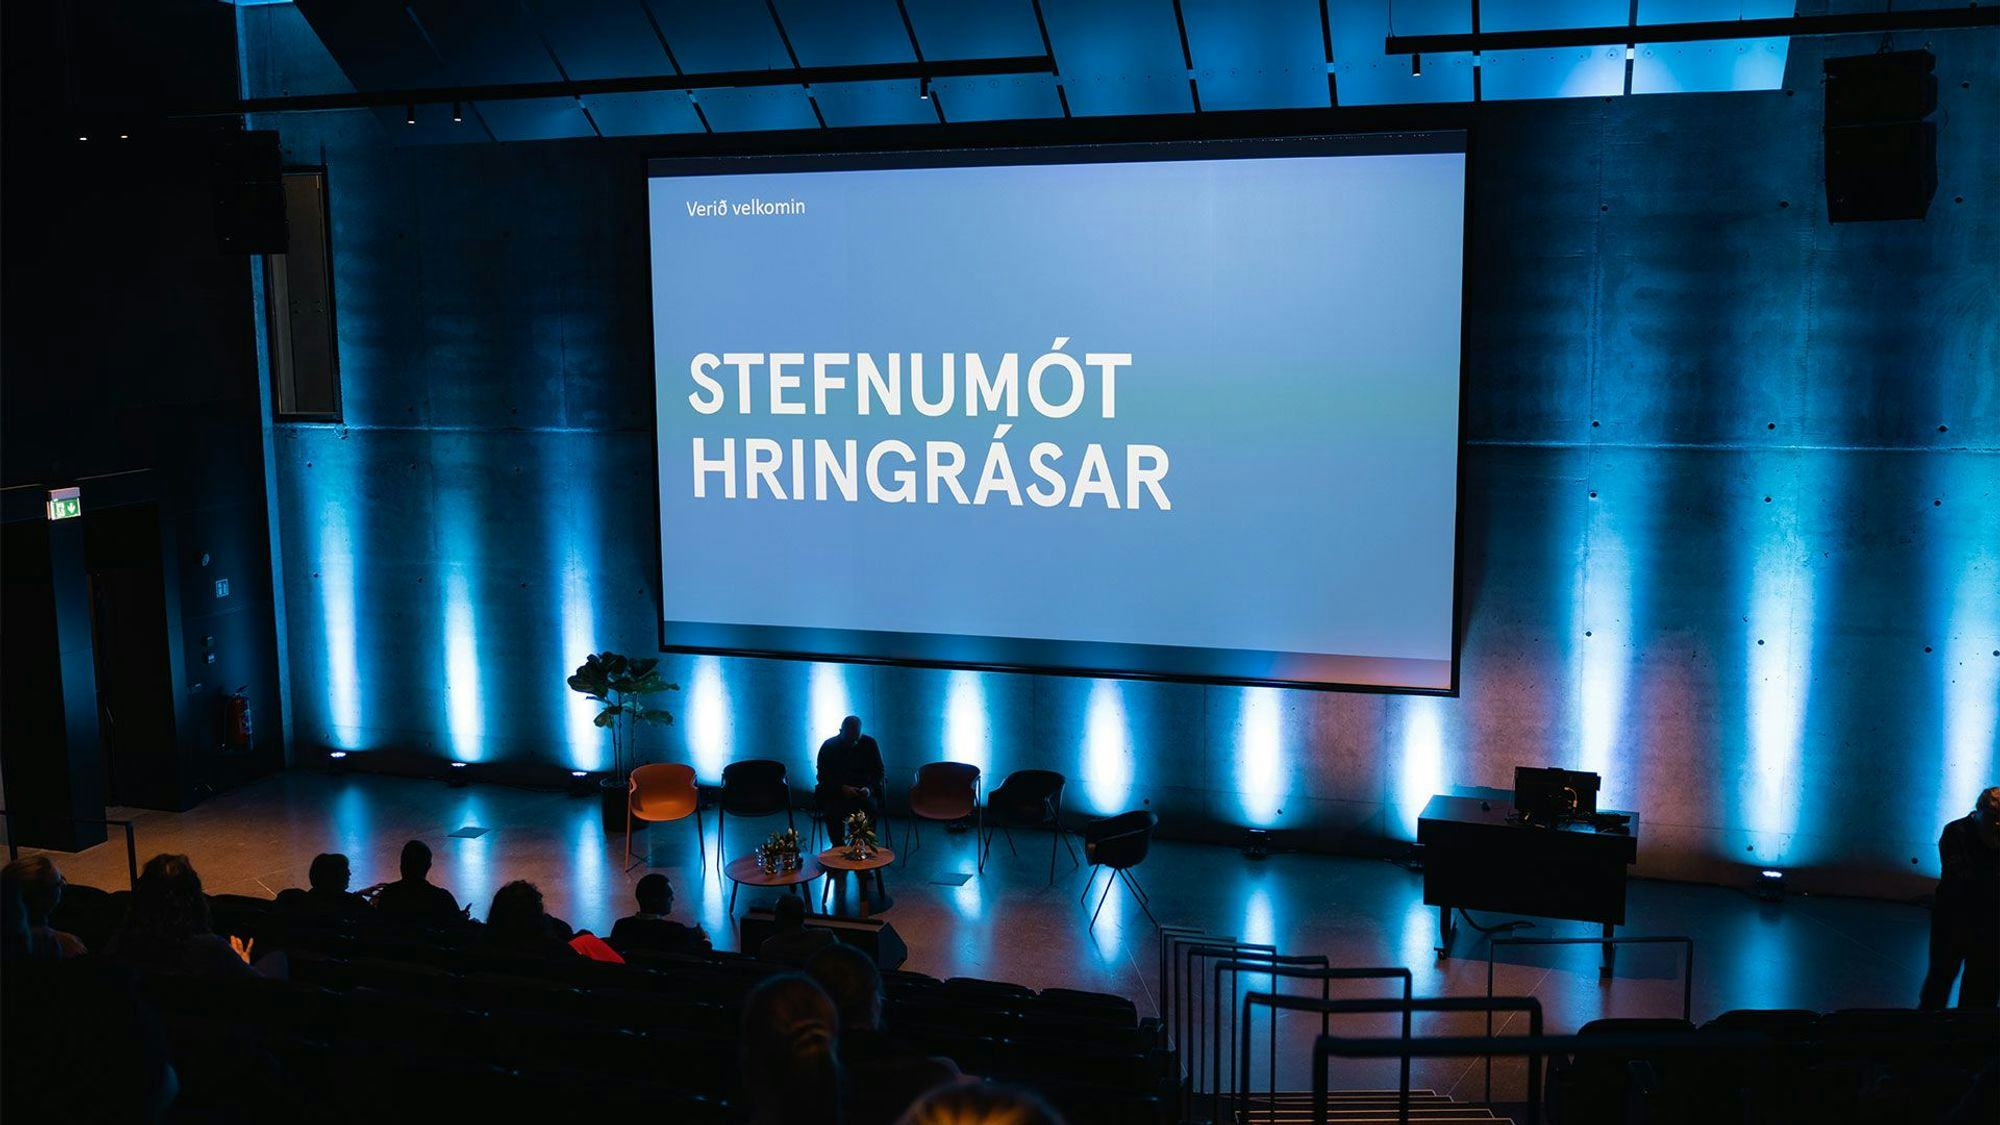 A dark auditorium with a large presentation screen displaying the title "STEFNUMOT HRINGRASAR"